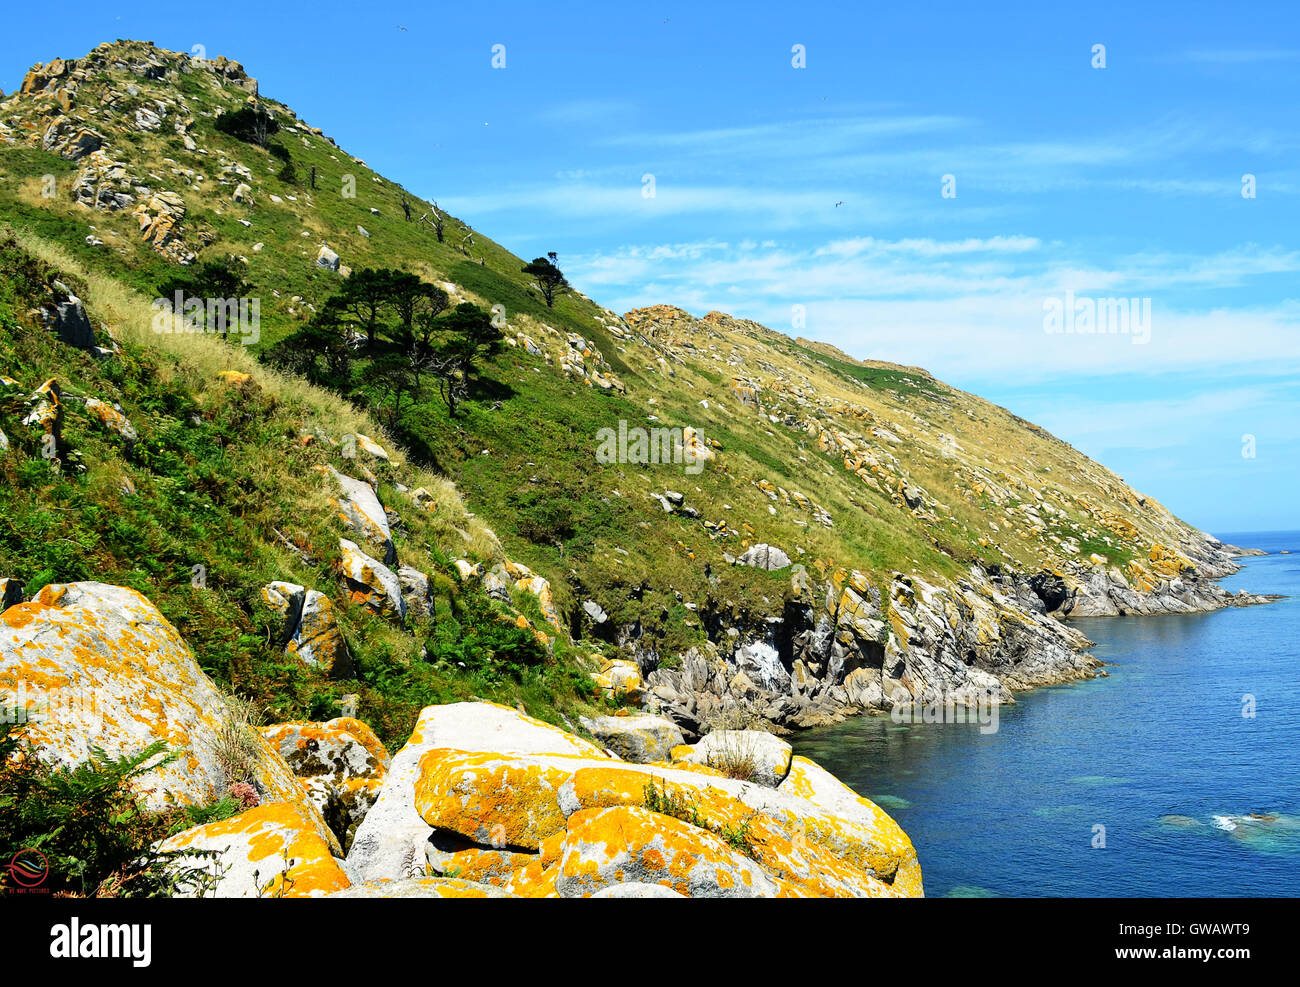 The Cies Islands are an archipelago off the coast of Pontevedra in Galicia (Spain), in the mouth of the Ría de Vigo. Stock Photo